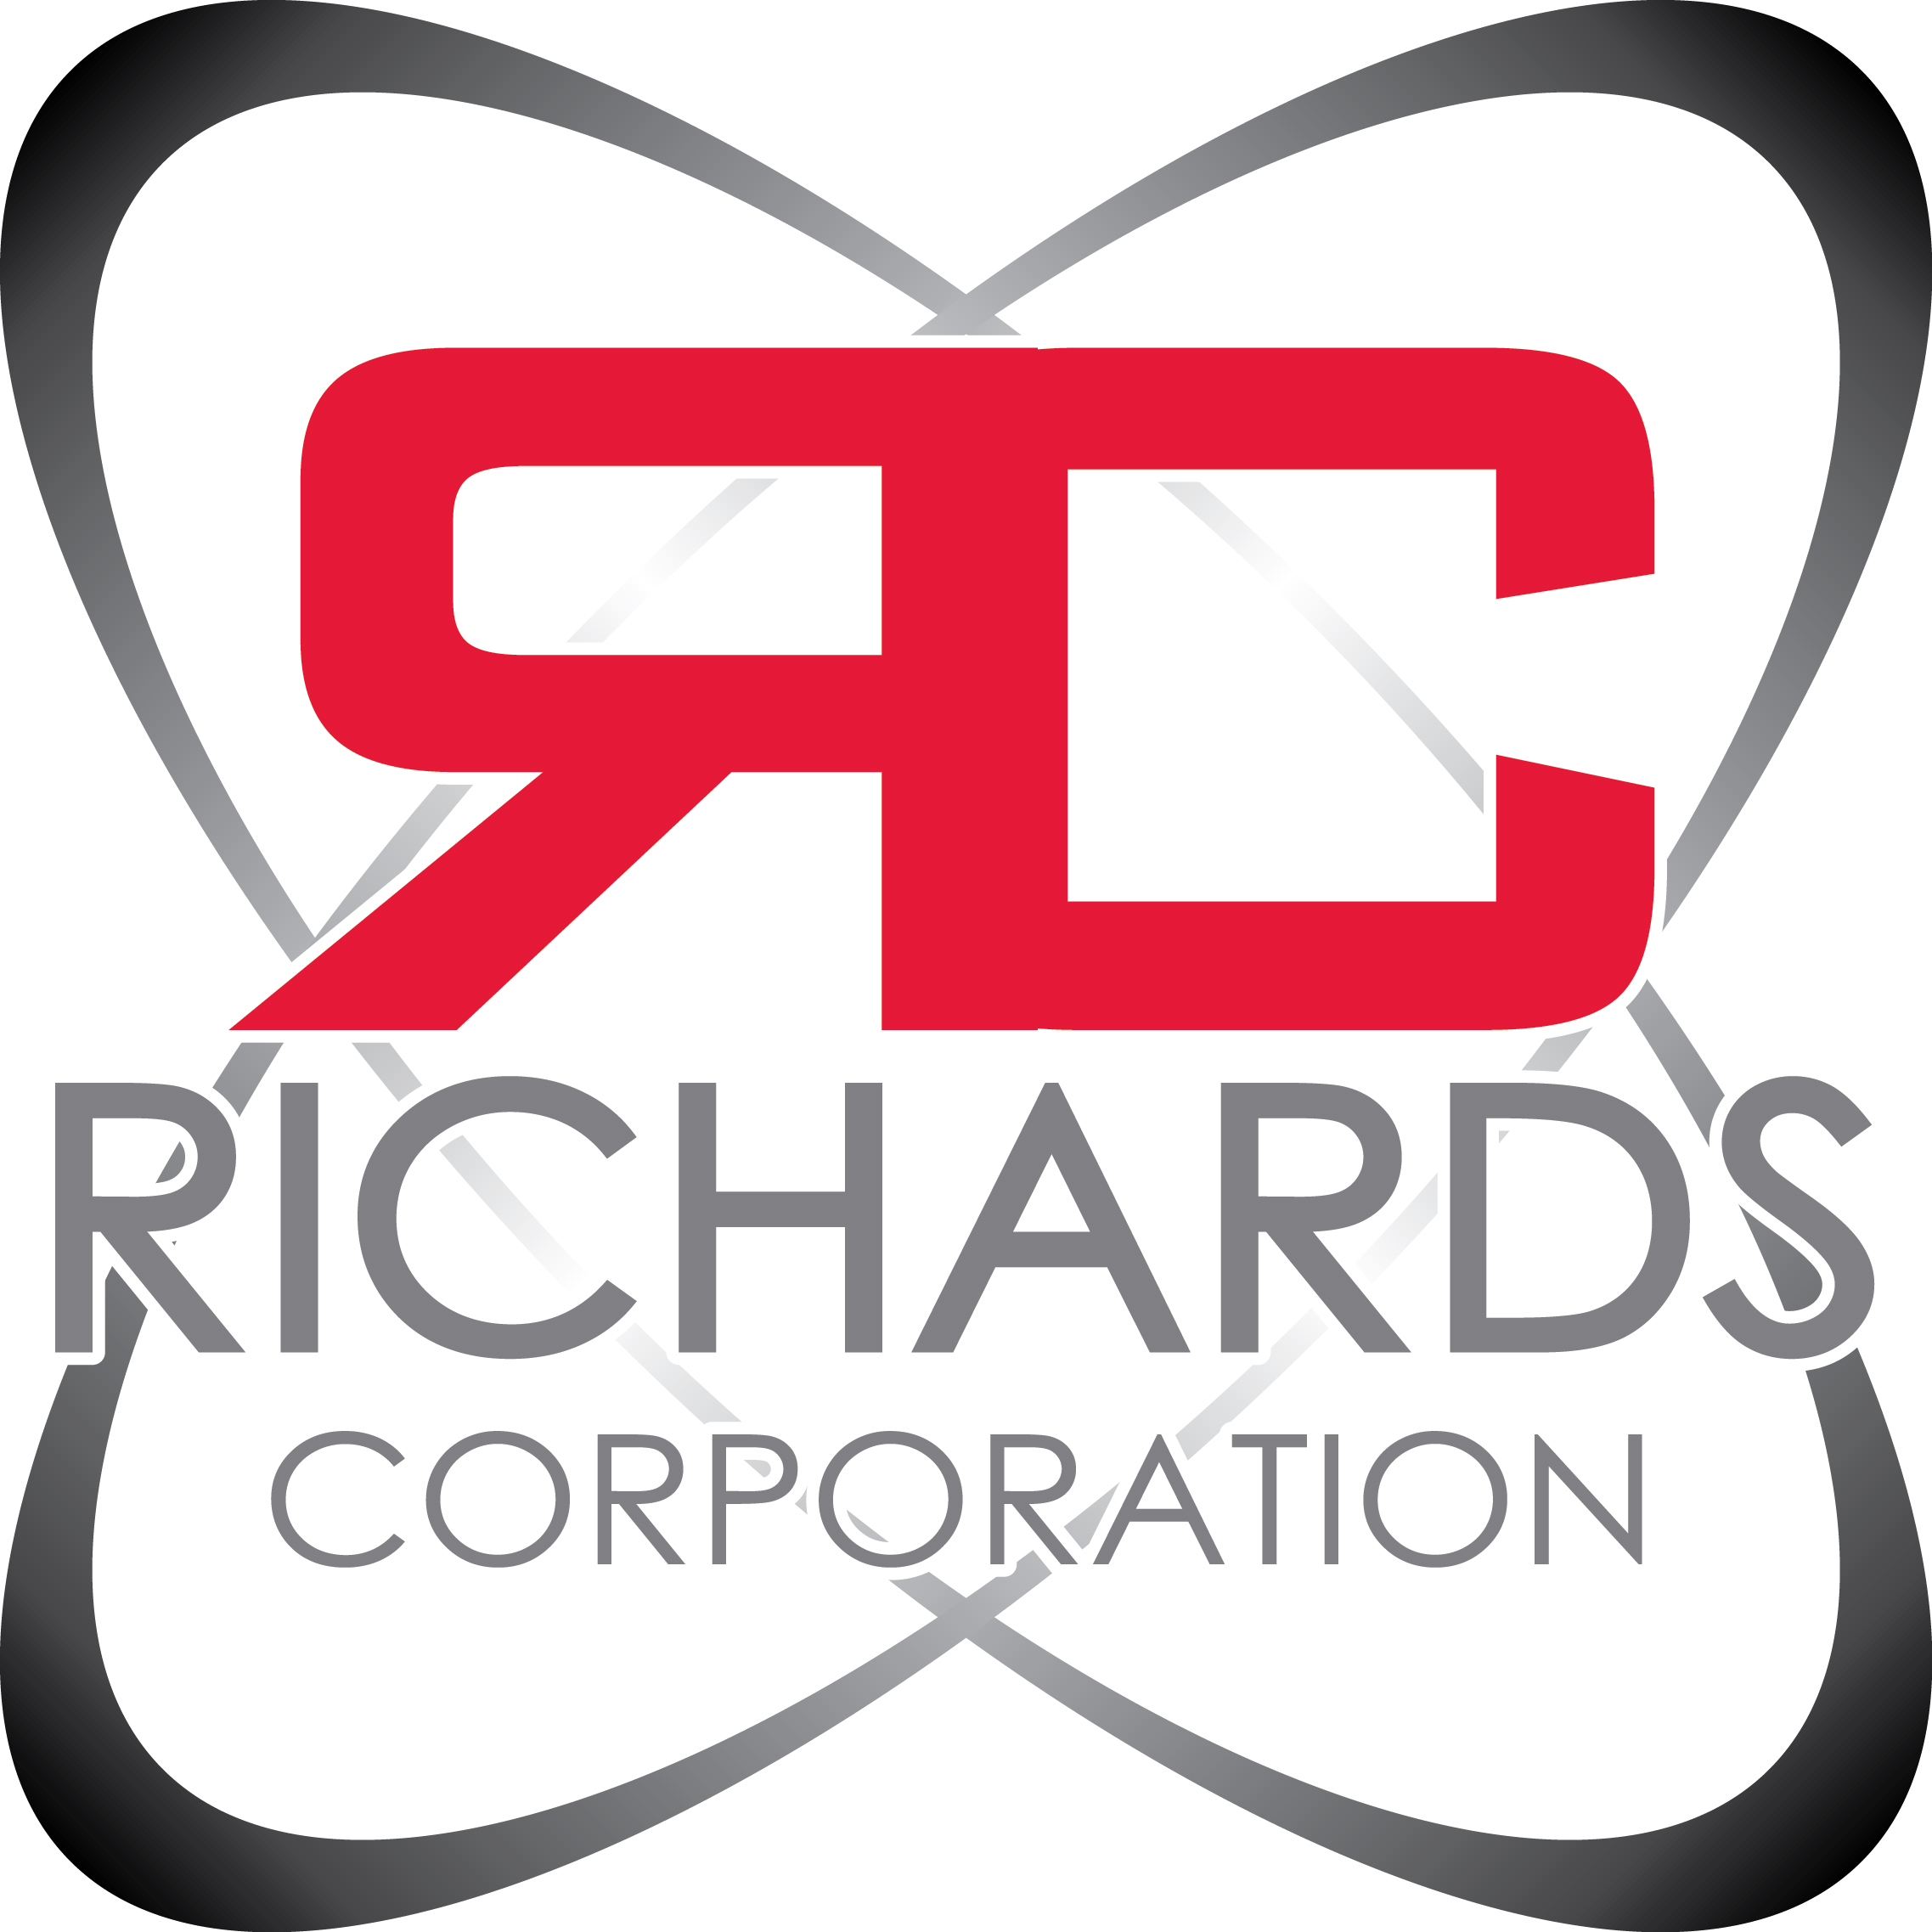 Richards Corporation logo